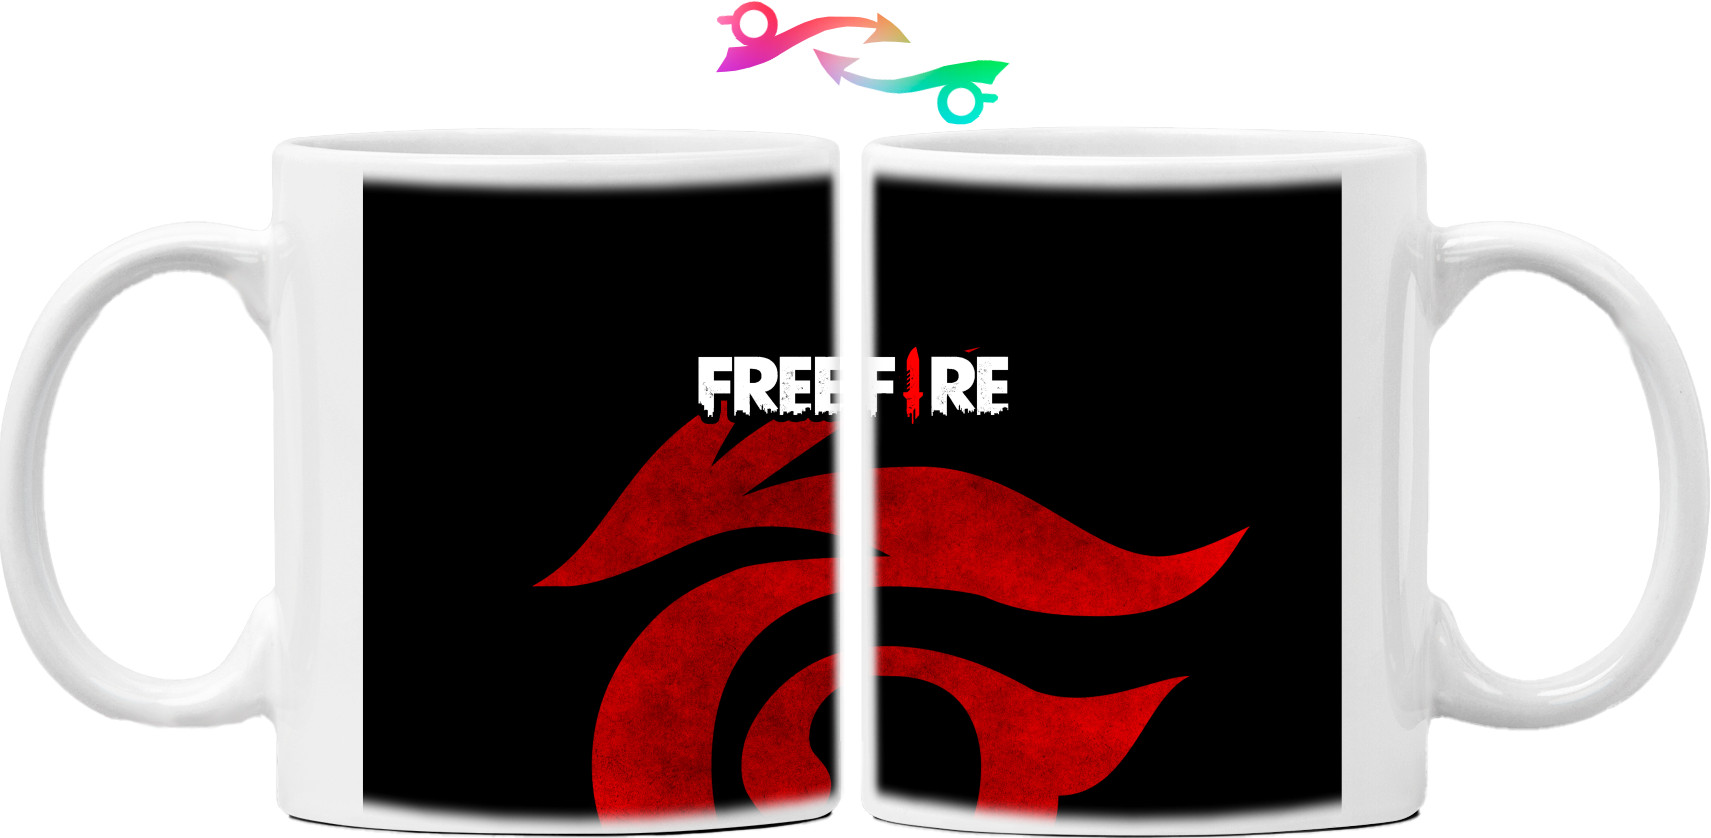 Garena Free Fire [4]